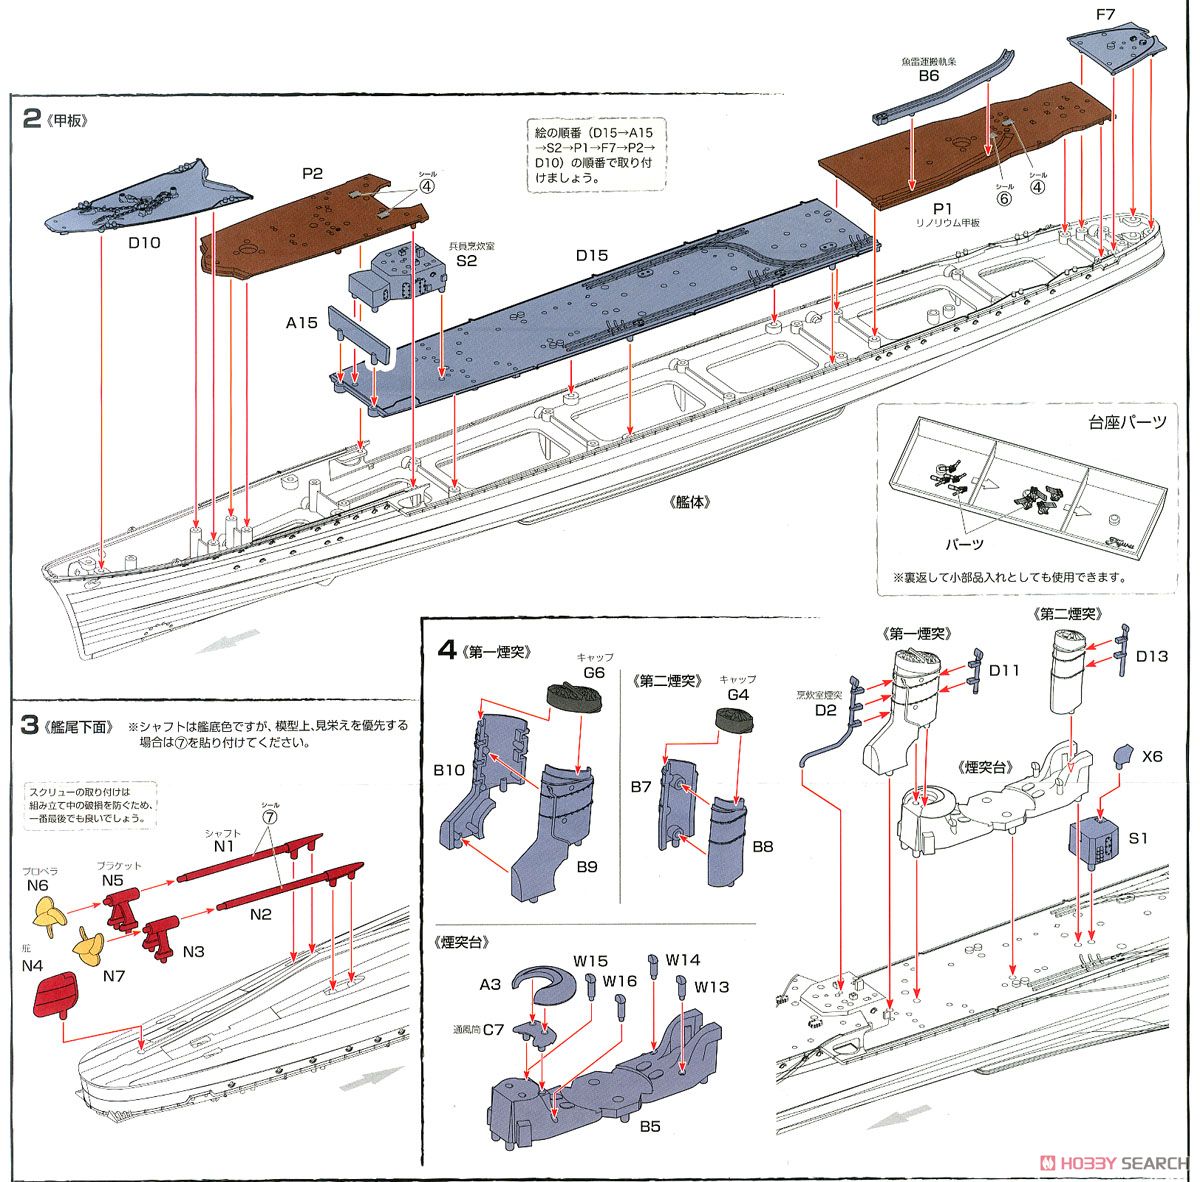 日本海軍駆逐艦 島風 最終時/昭和19年 (プラモデル) 設計図2